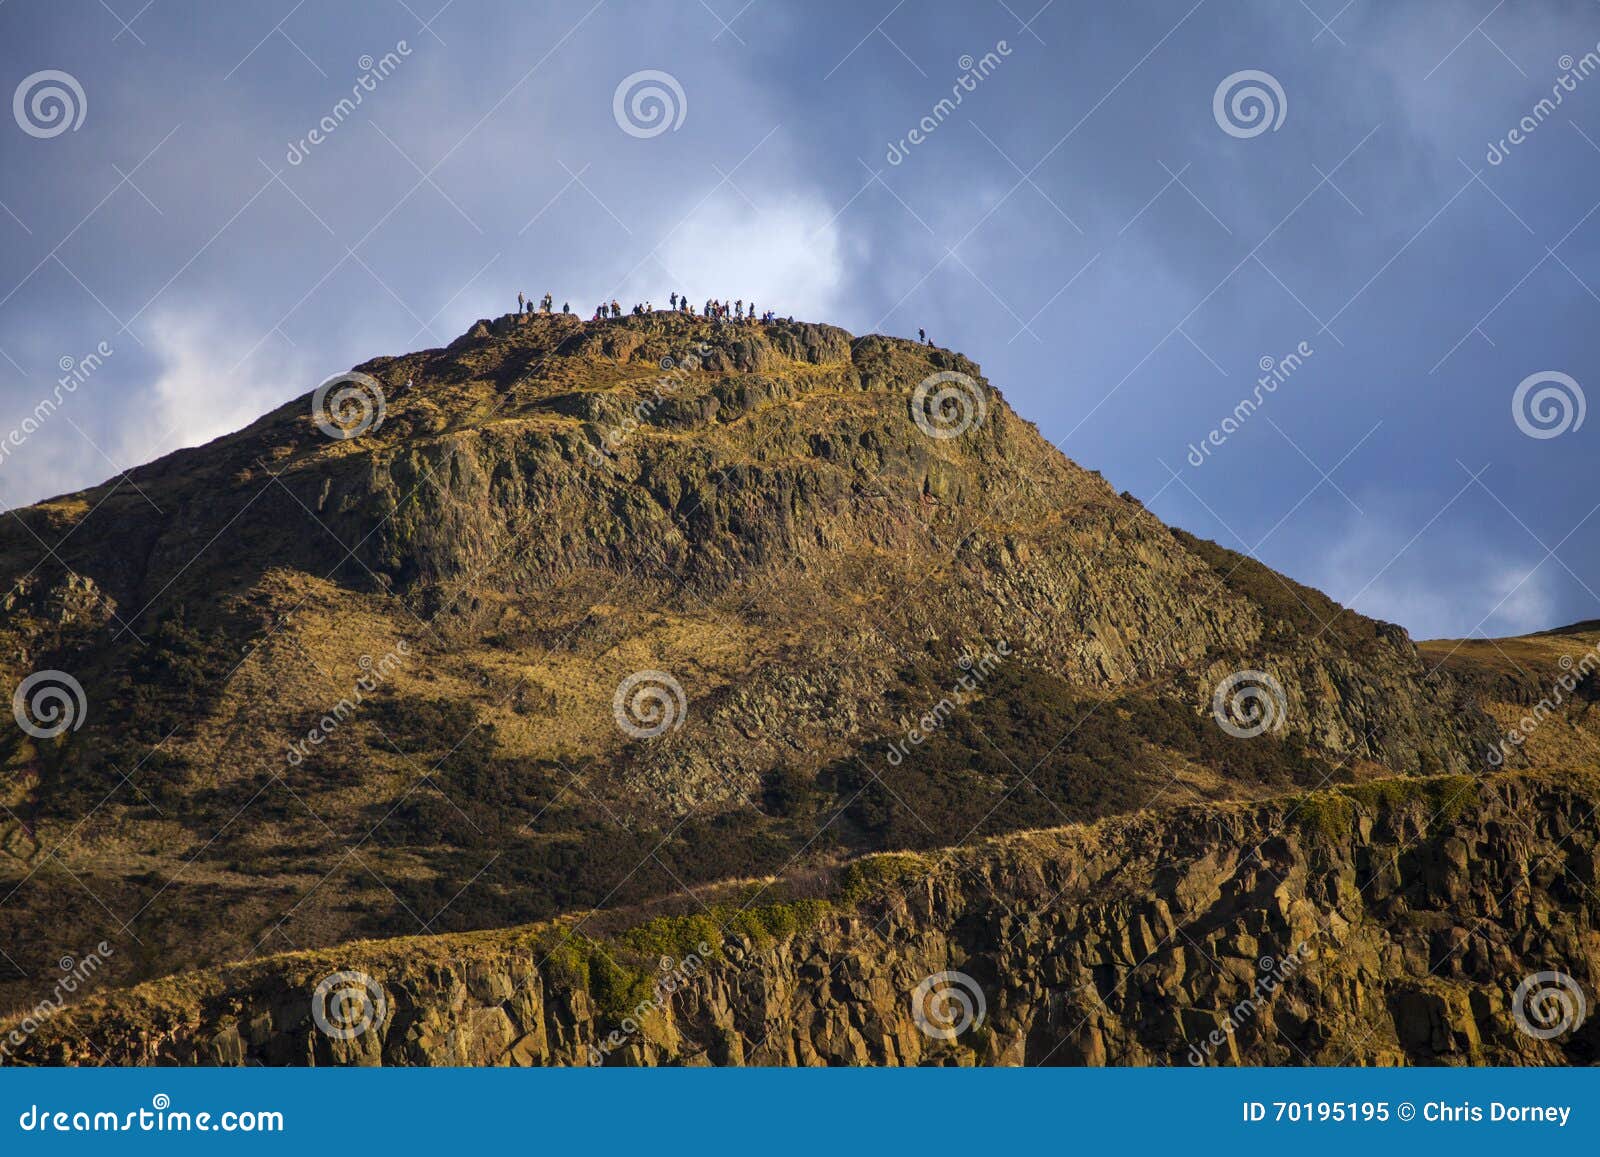 Asiento de Arthurs en Edimburgo. La vista magnífica de Arthurs Seat de la colina de Calton en Edimburgo, Escocia